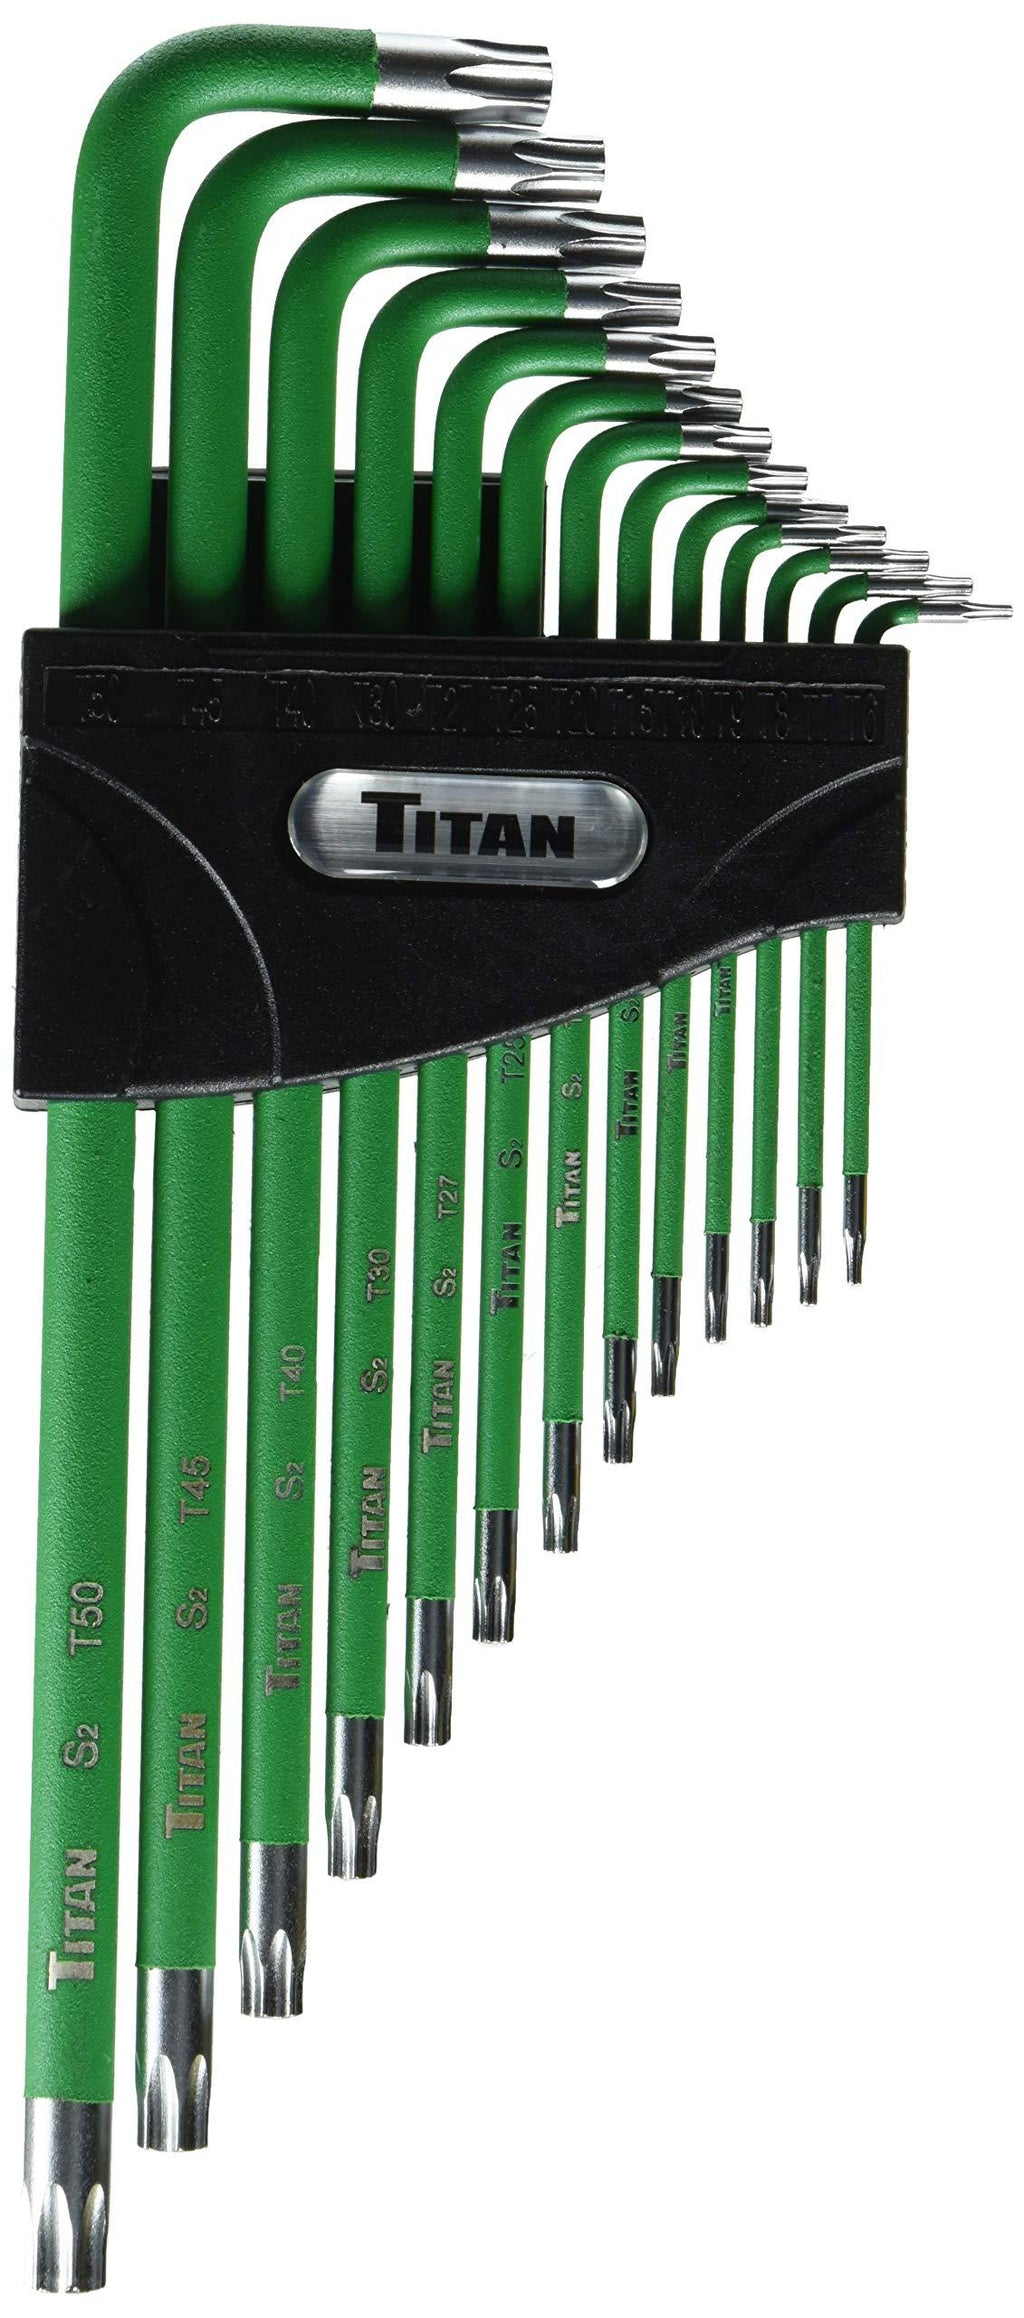  [AUSTRALIA] - Titan 12715 13-Piece Extra Long Tamper Resistant Star Key Set,Green